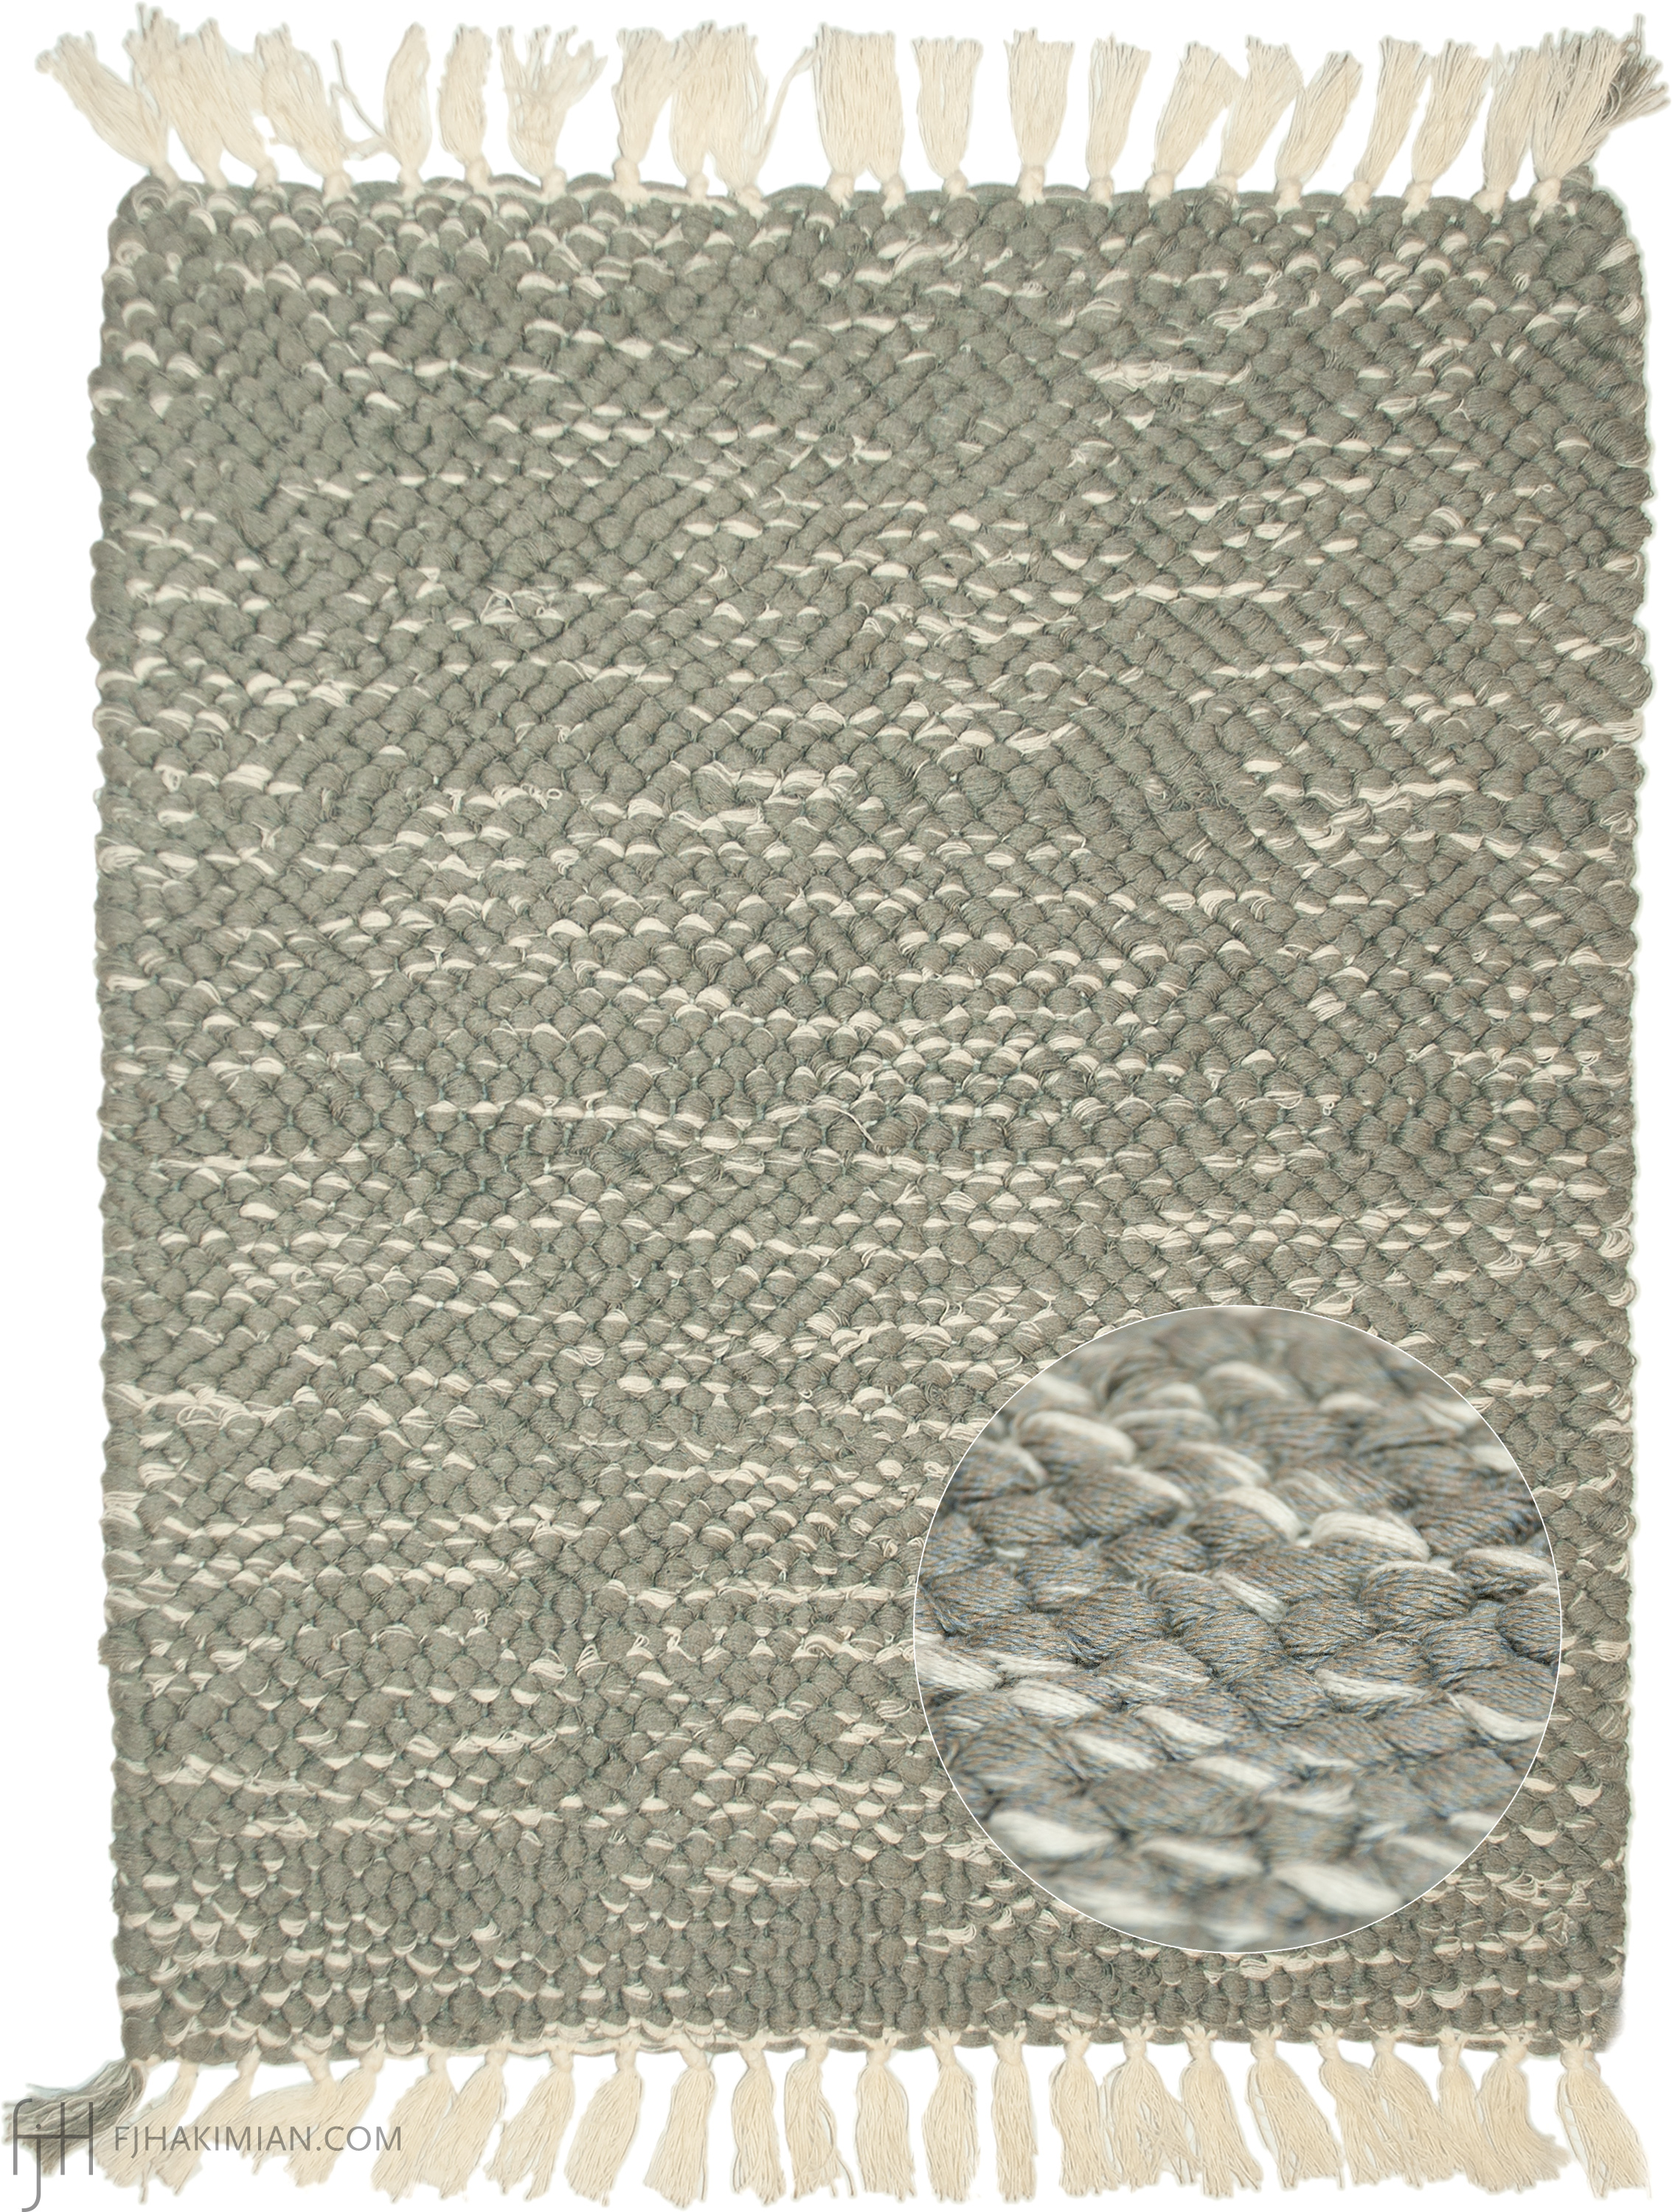 WY-HPM07 | Custom South American Carpet | FJ Hakimian | Carpet Gallery in NYC